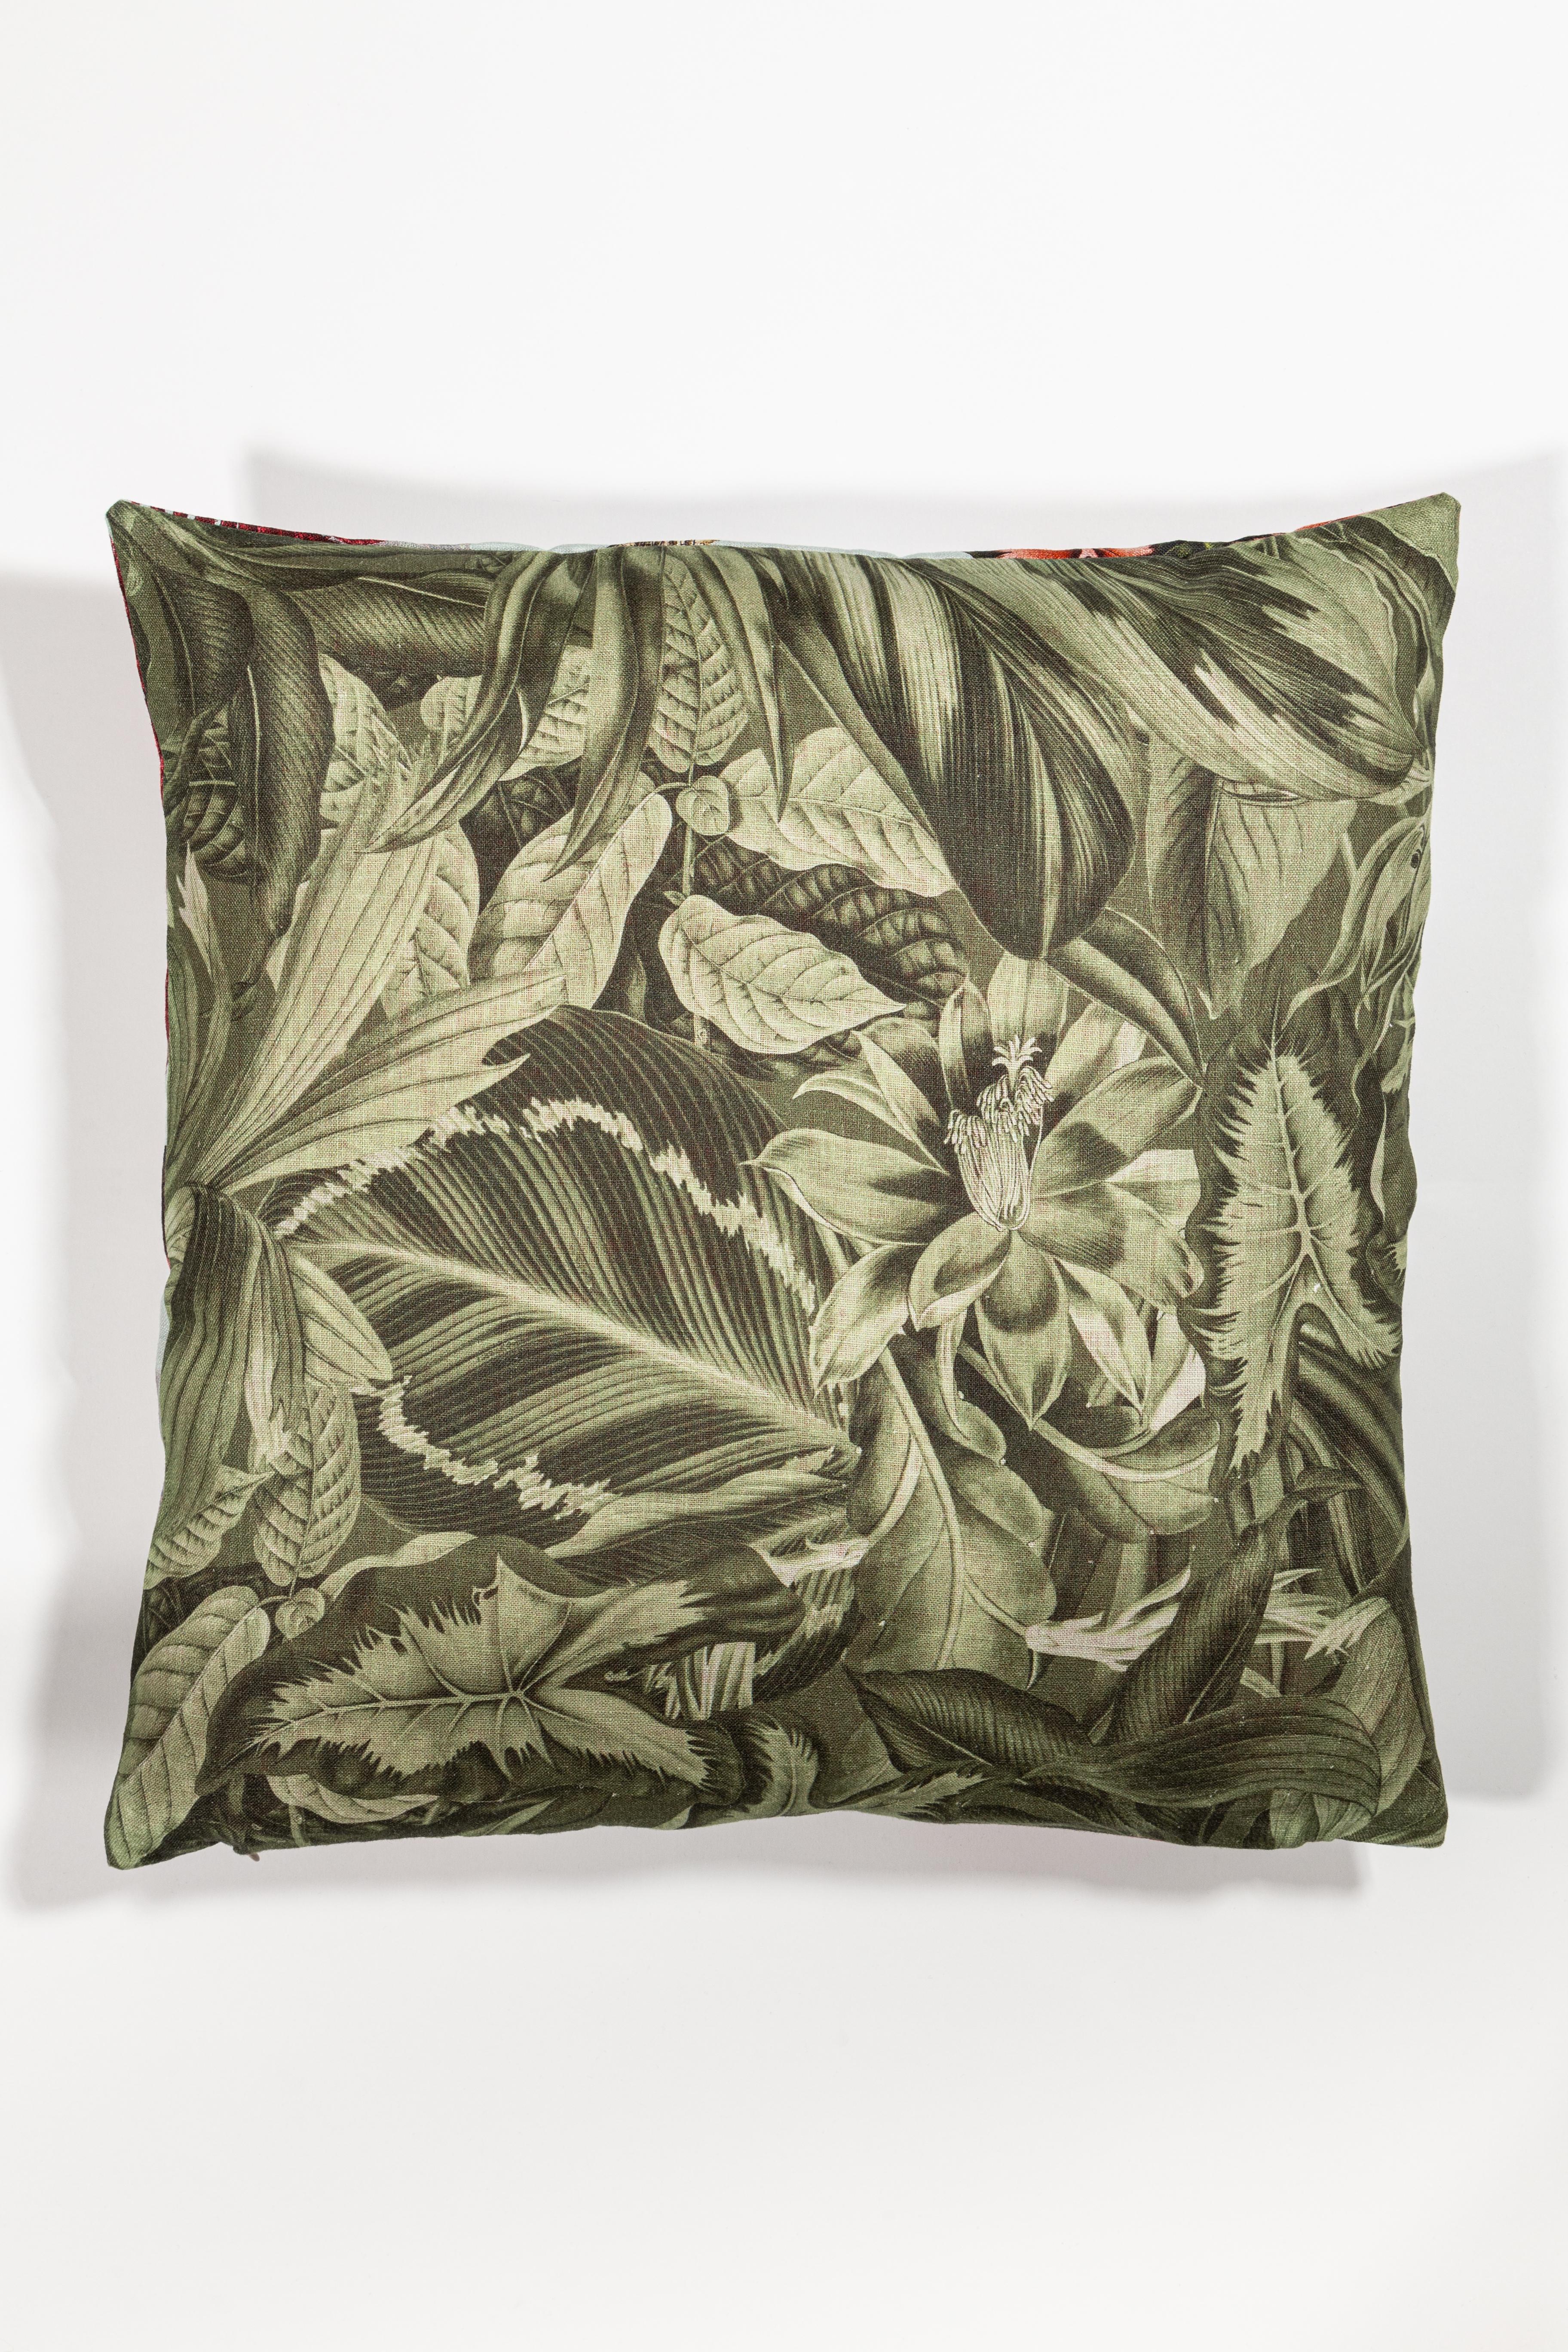 Animalia, Parrots, Contemporary Linen Printed Pillow by Vito Nesta For Sale 4